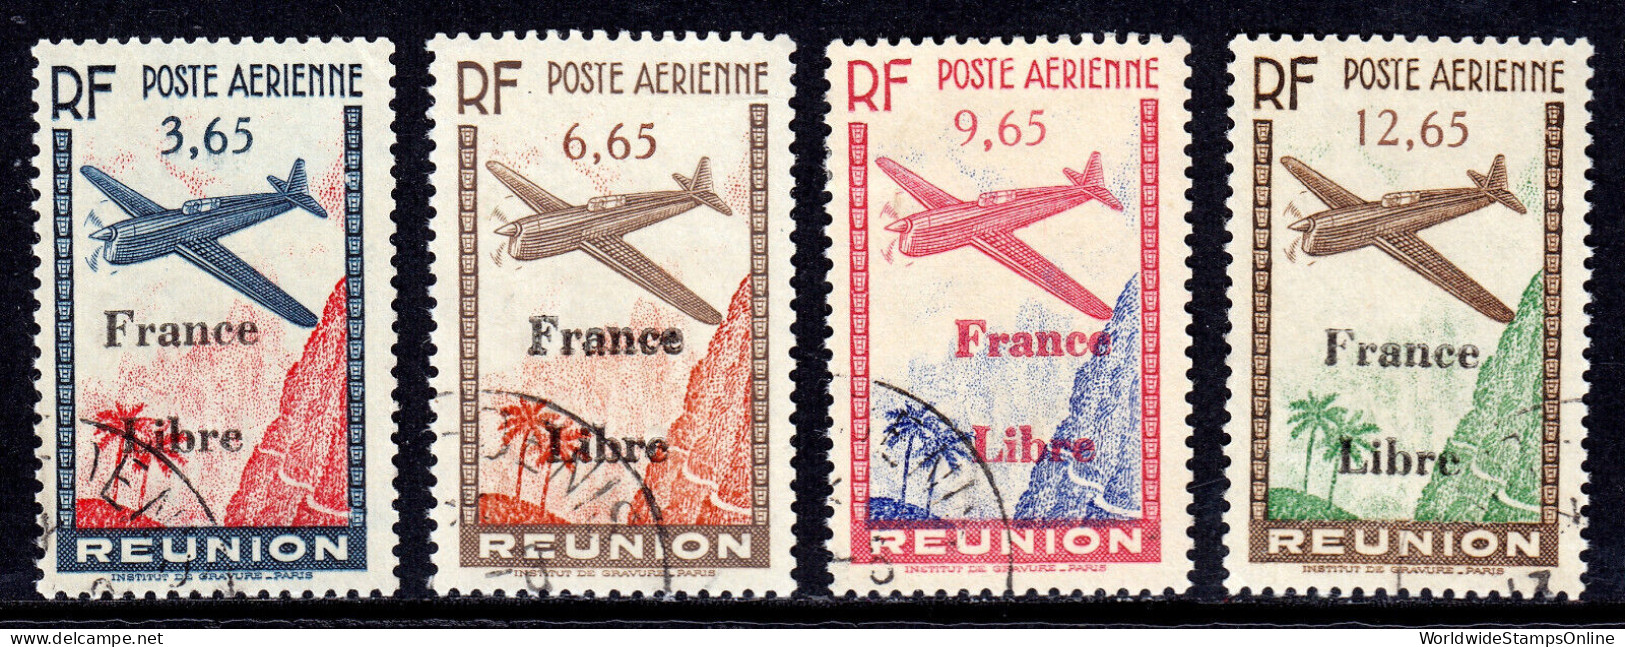 FRANCE (REUNION) — SCOTT C14-C17 — 1943 FRANCE LIBRE AIRMAIL SET— USED — SCV $22 - Luchtpost